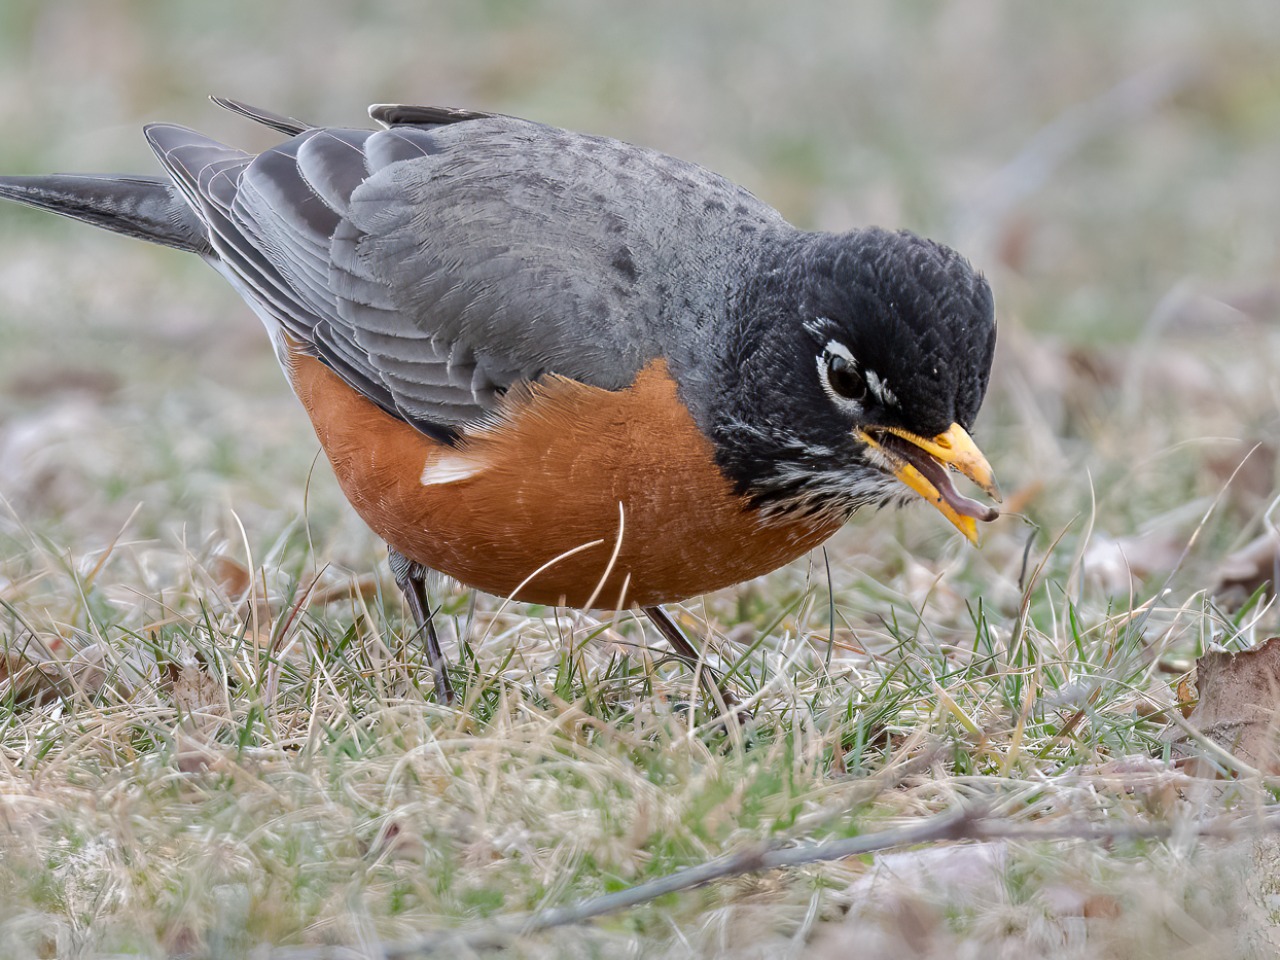 Robin foraging on ground